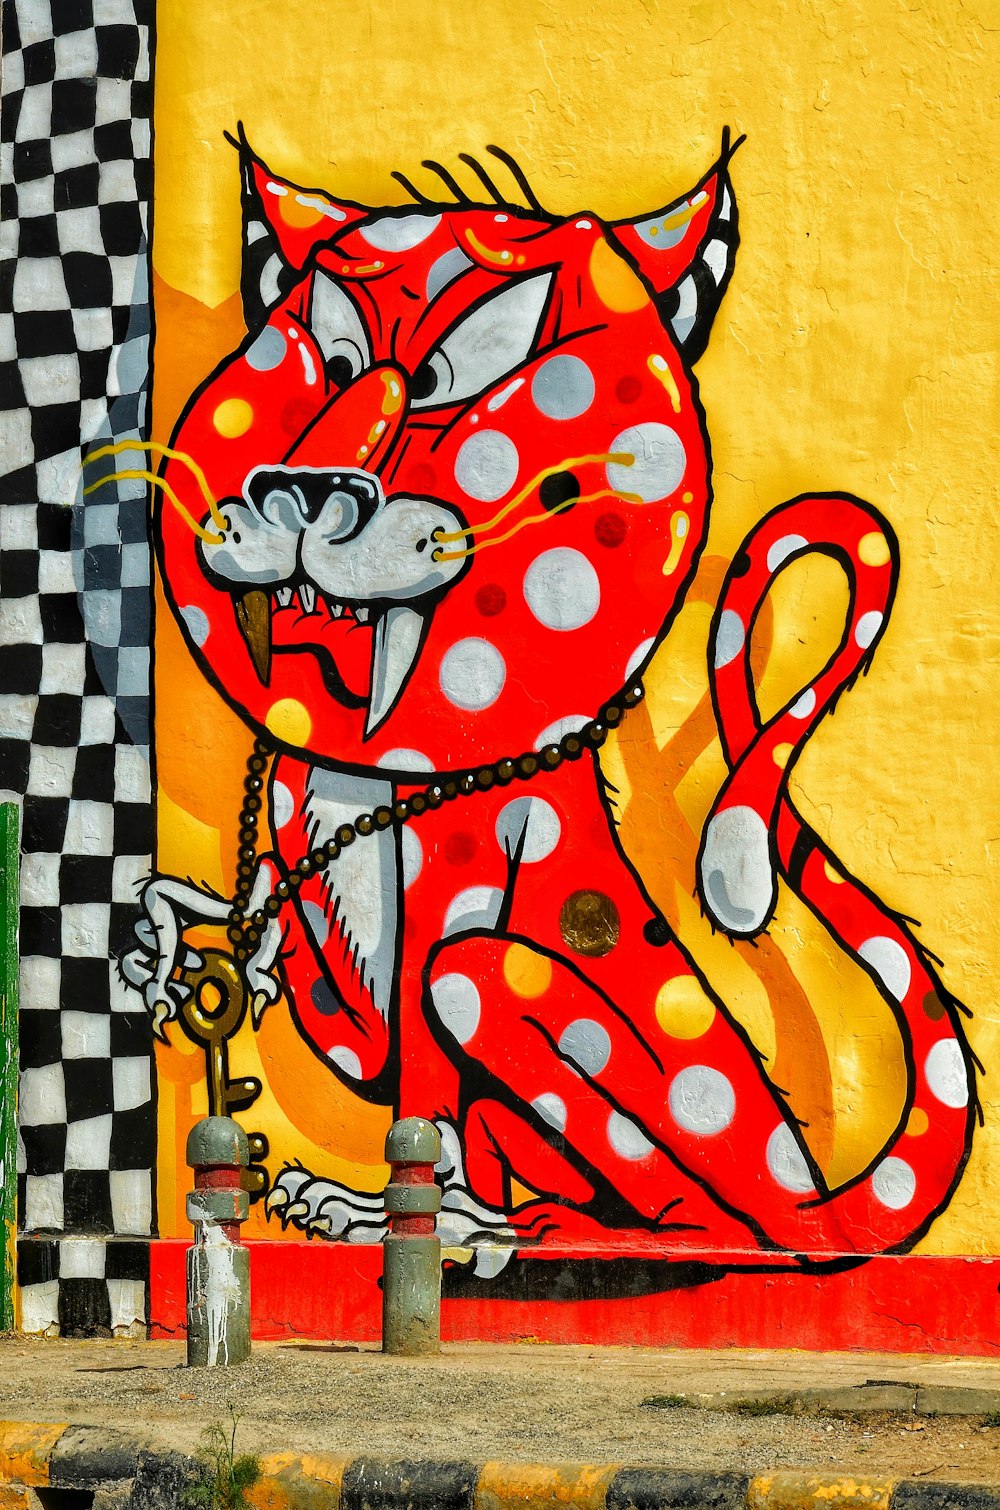 red cat illustration